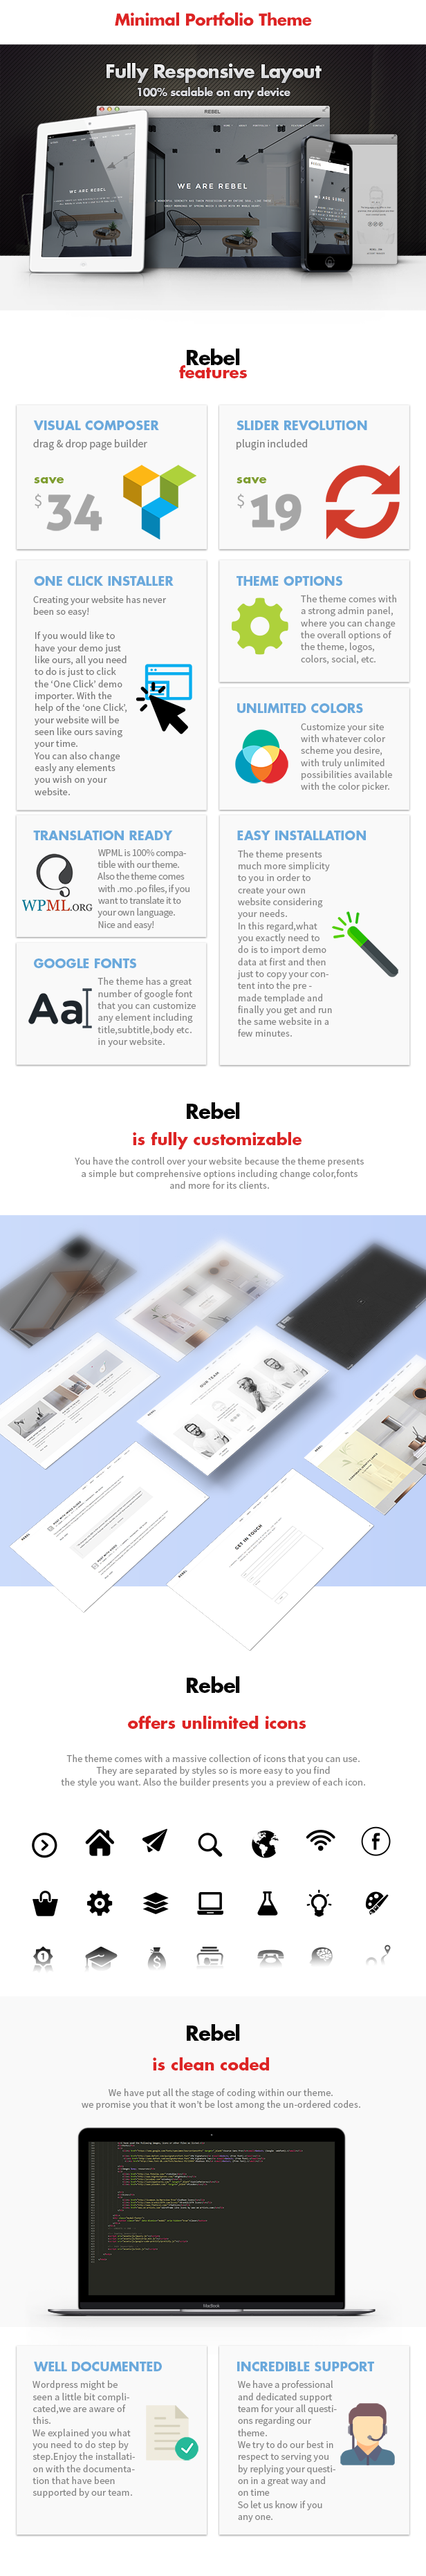 Rebel - Minimal Portfolio WordPress Theme - 6